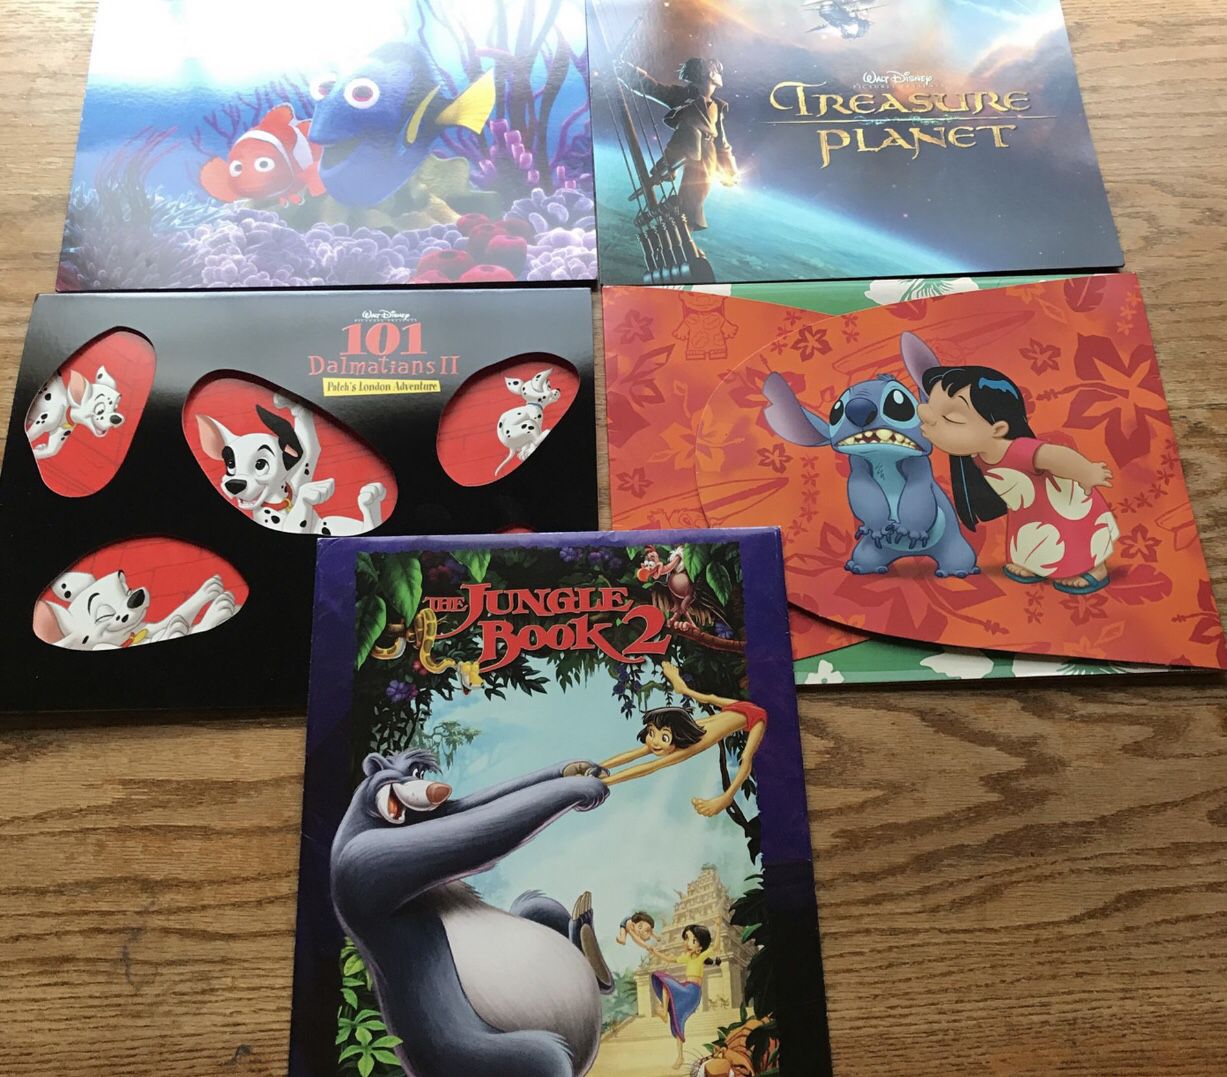 Disney’s Disney store lithographs Lilo and stitch finding Nemo treasure planet 101 dalmatians and jungle book 2